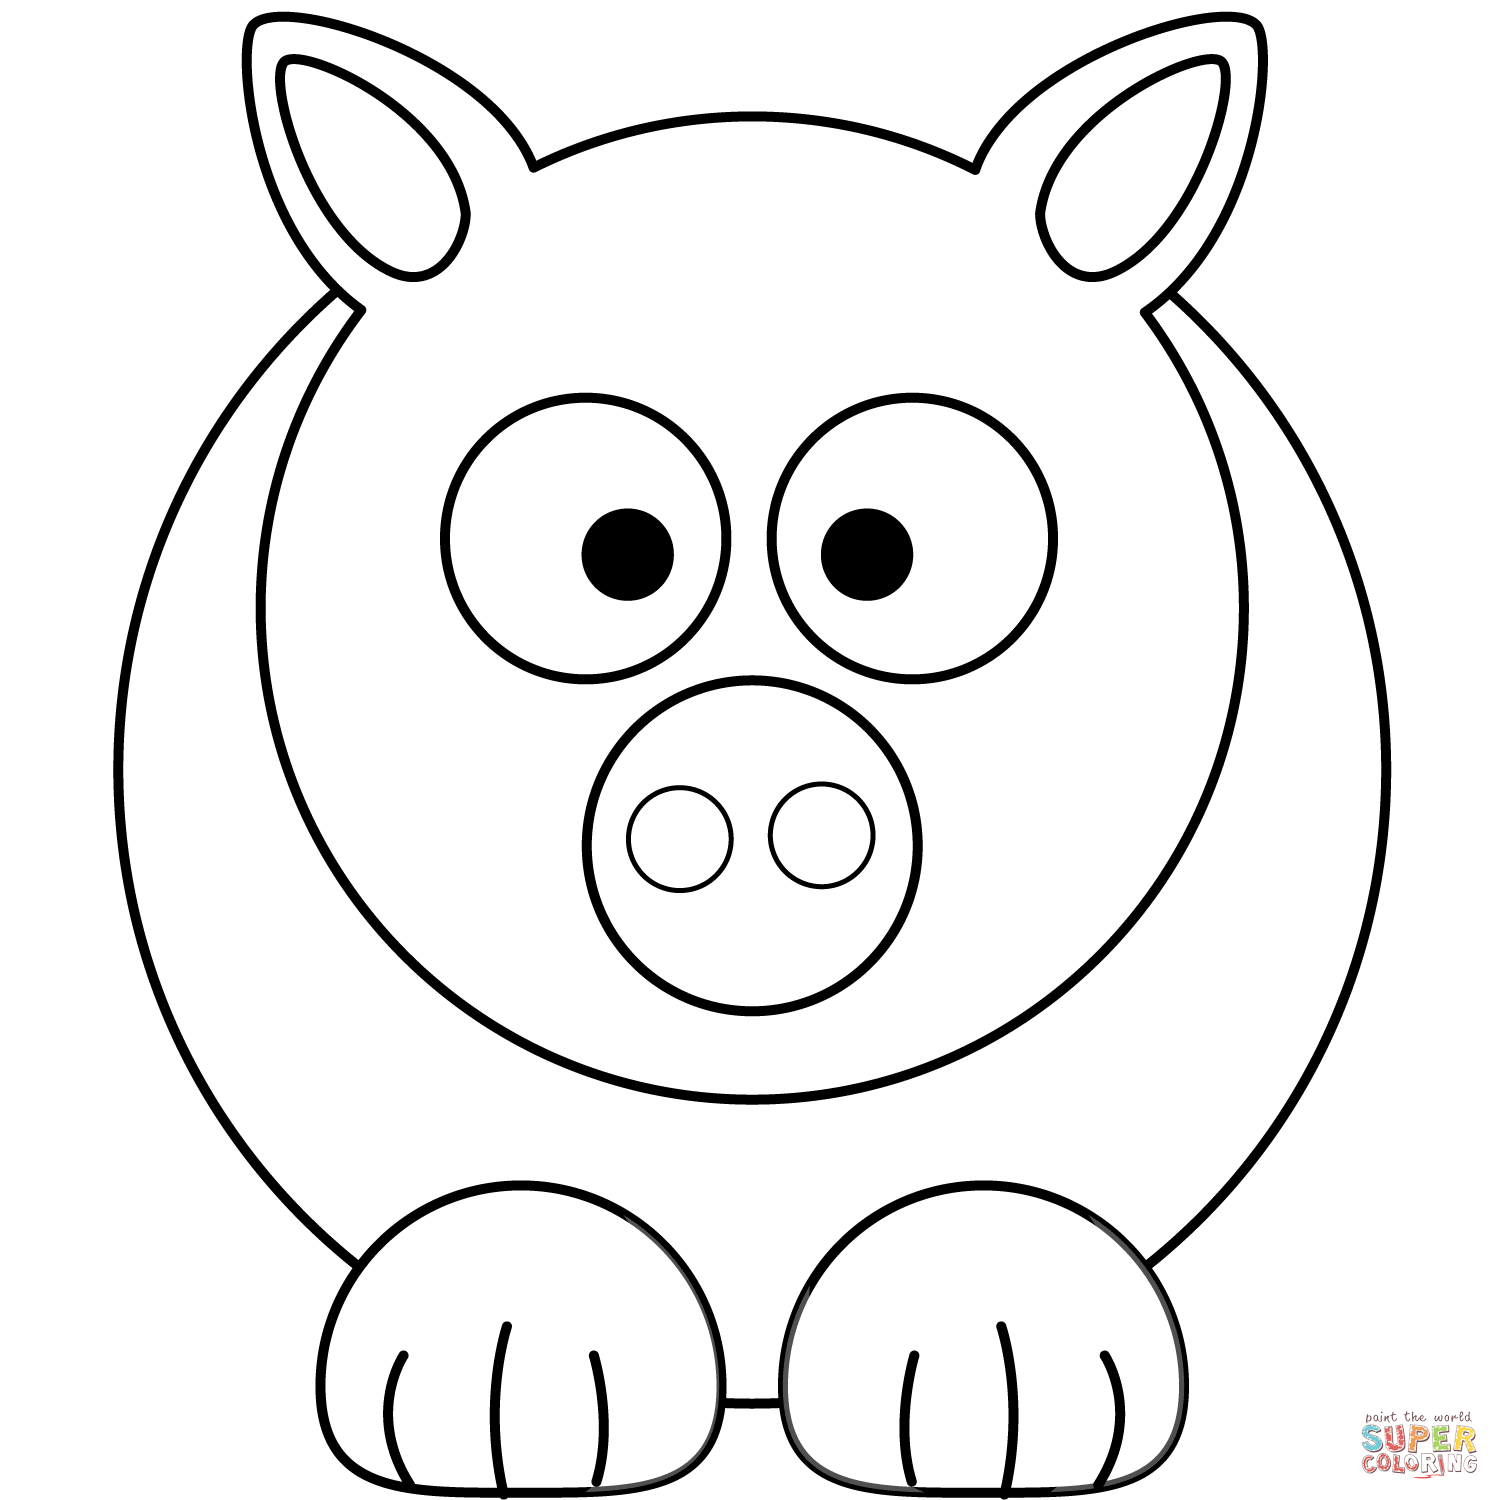 Pig Face Coloring Page - AZ Coloring Pages